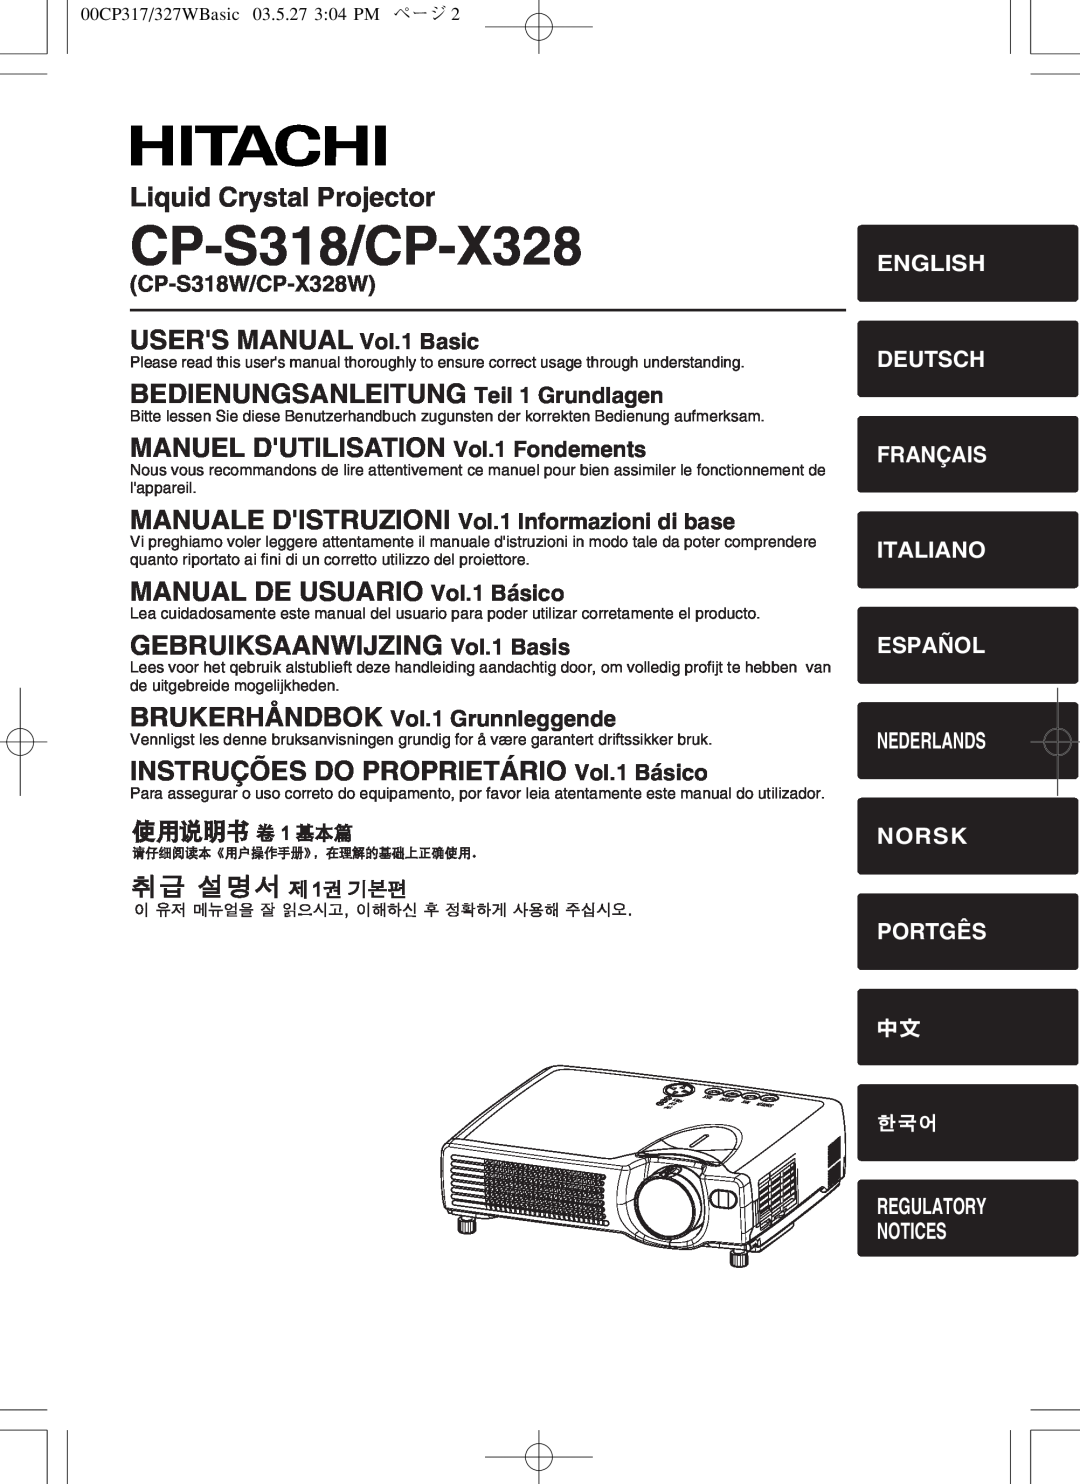 Hitachi cp-s318 user manual CP-S318W/CP-X328W, MANUALE DISTRUZIONI Vol.1 Informazioni di base, CP-S318/CP-X328 